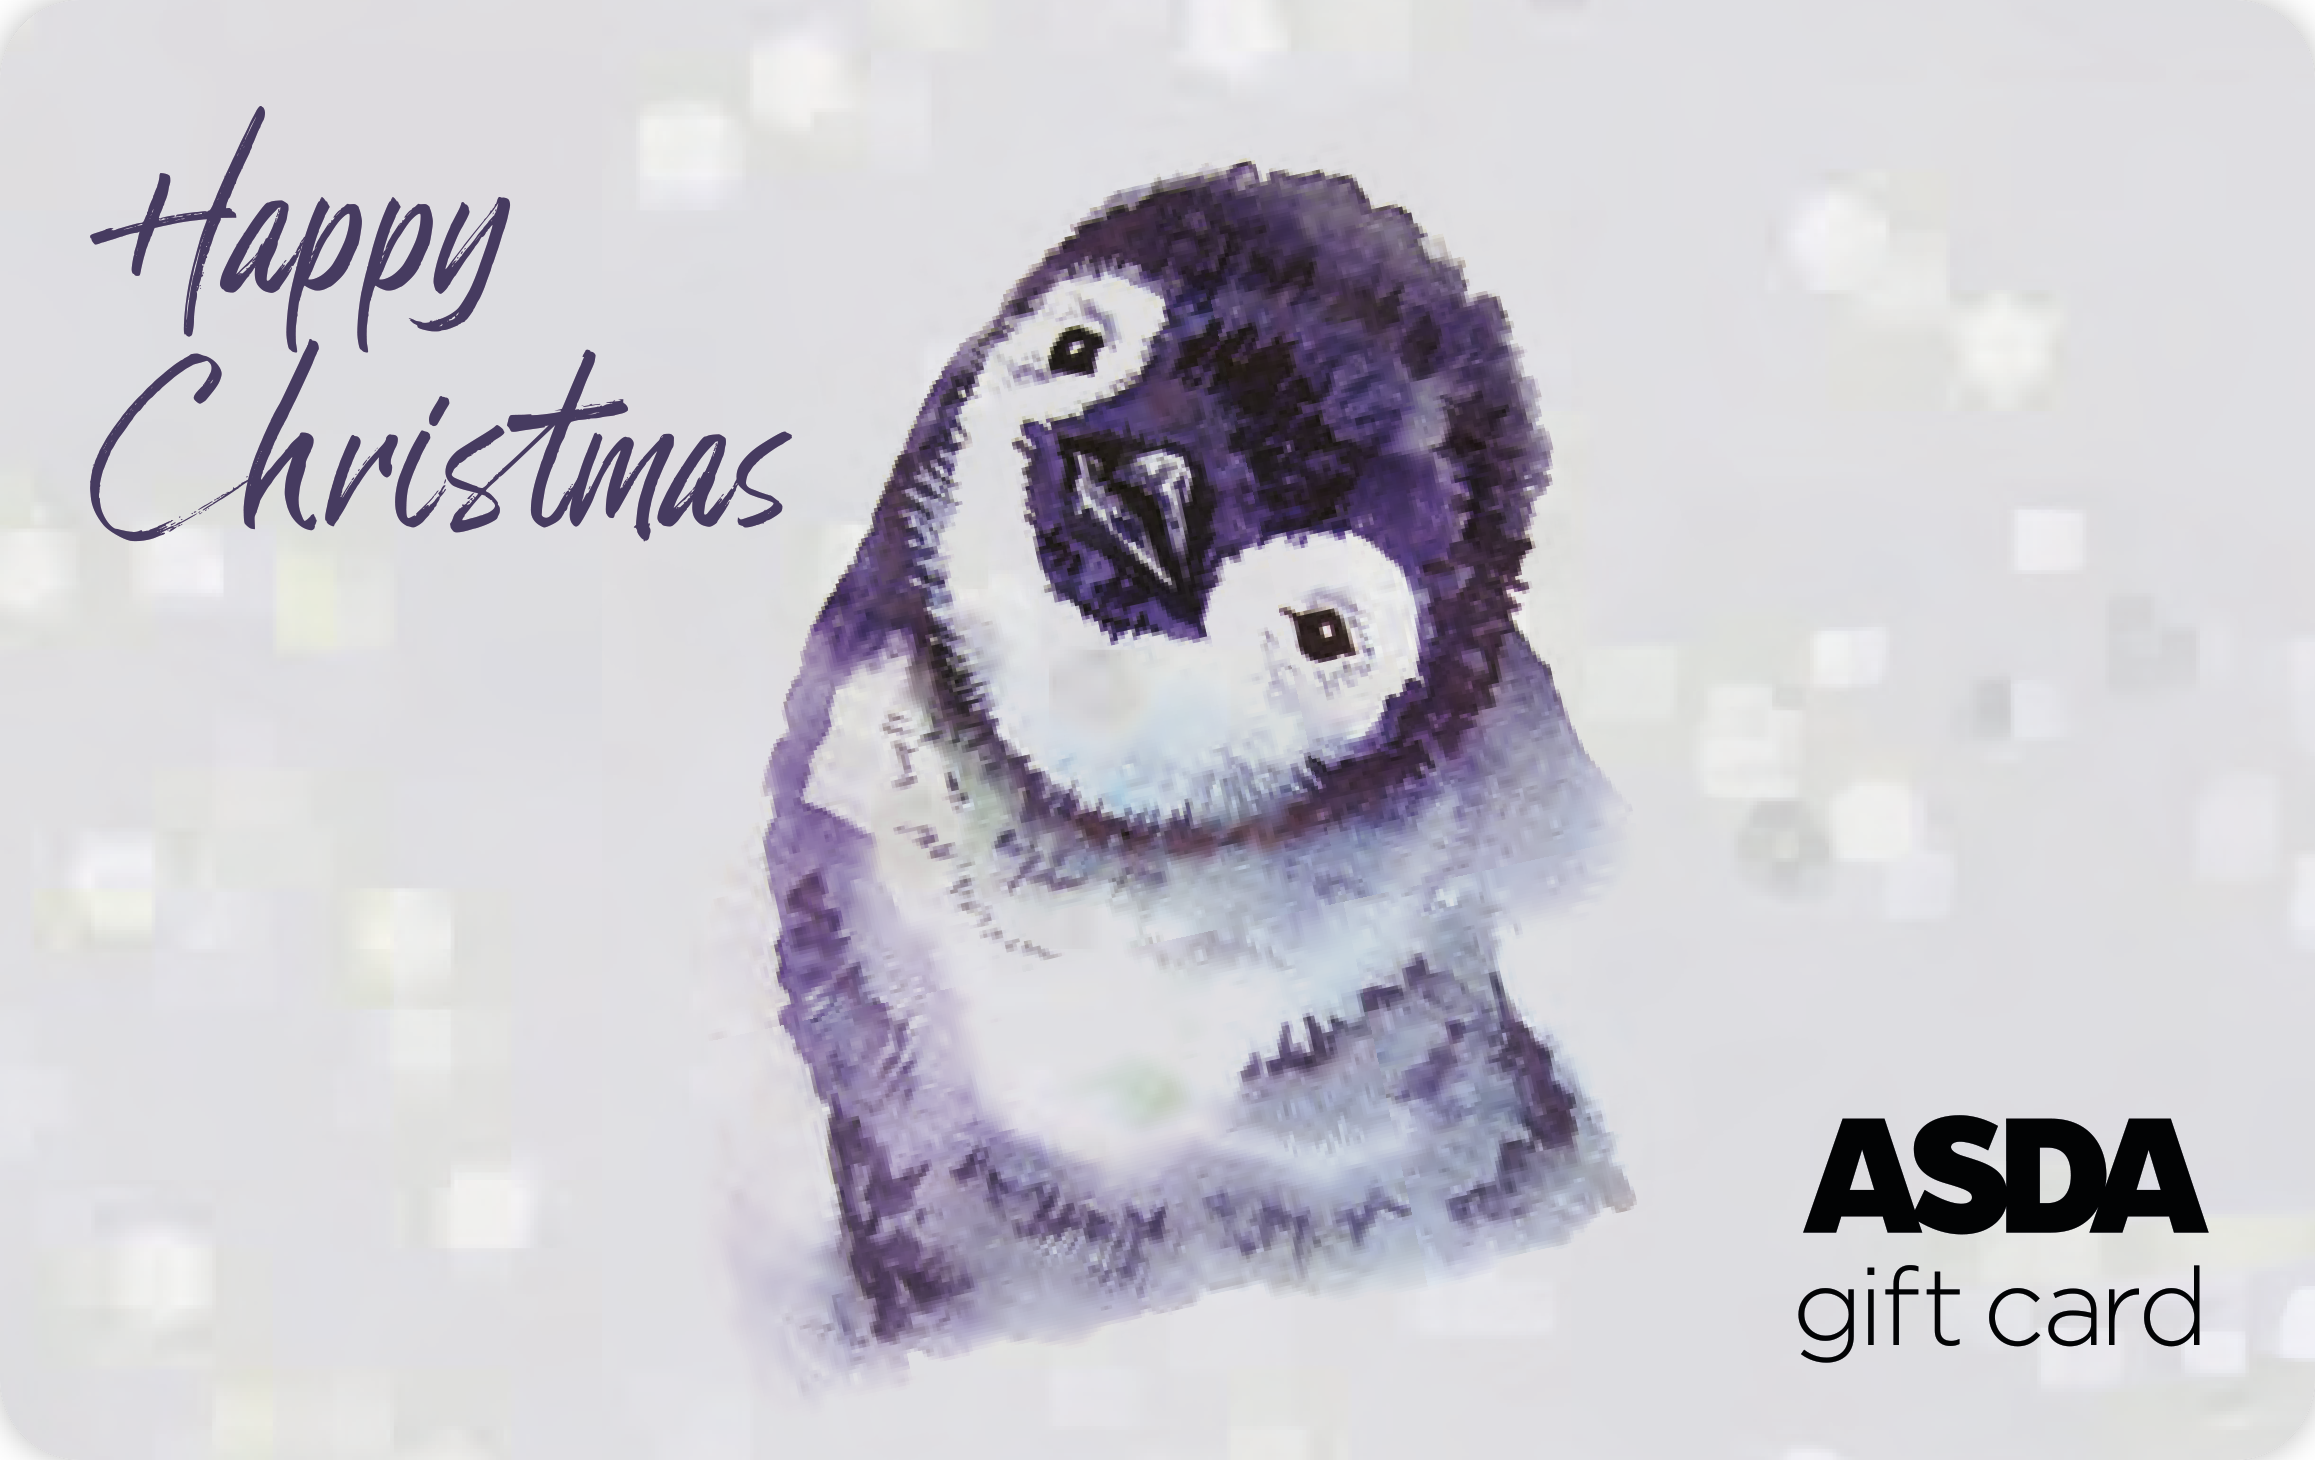 Asda Christmas Penguin Gift Card card image